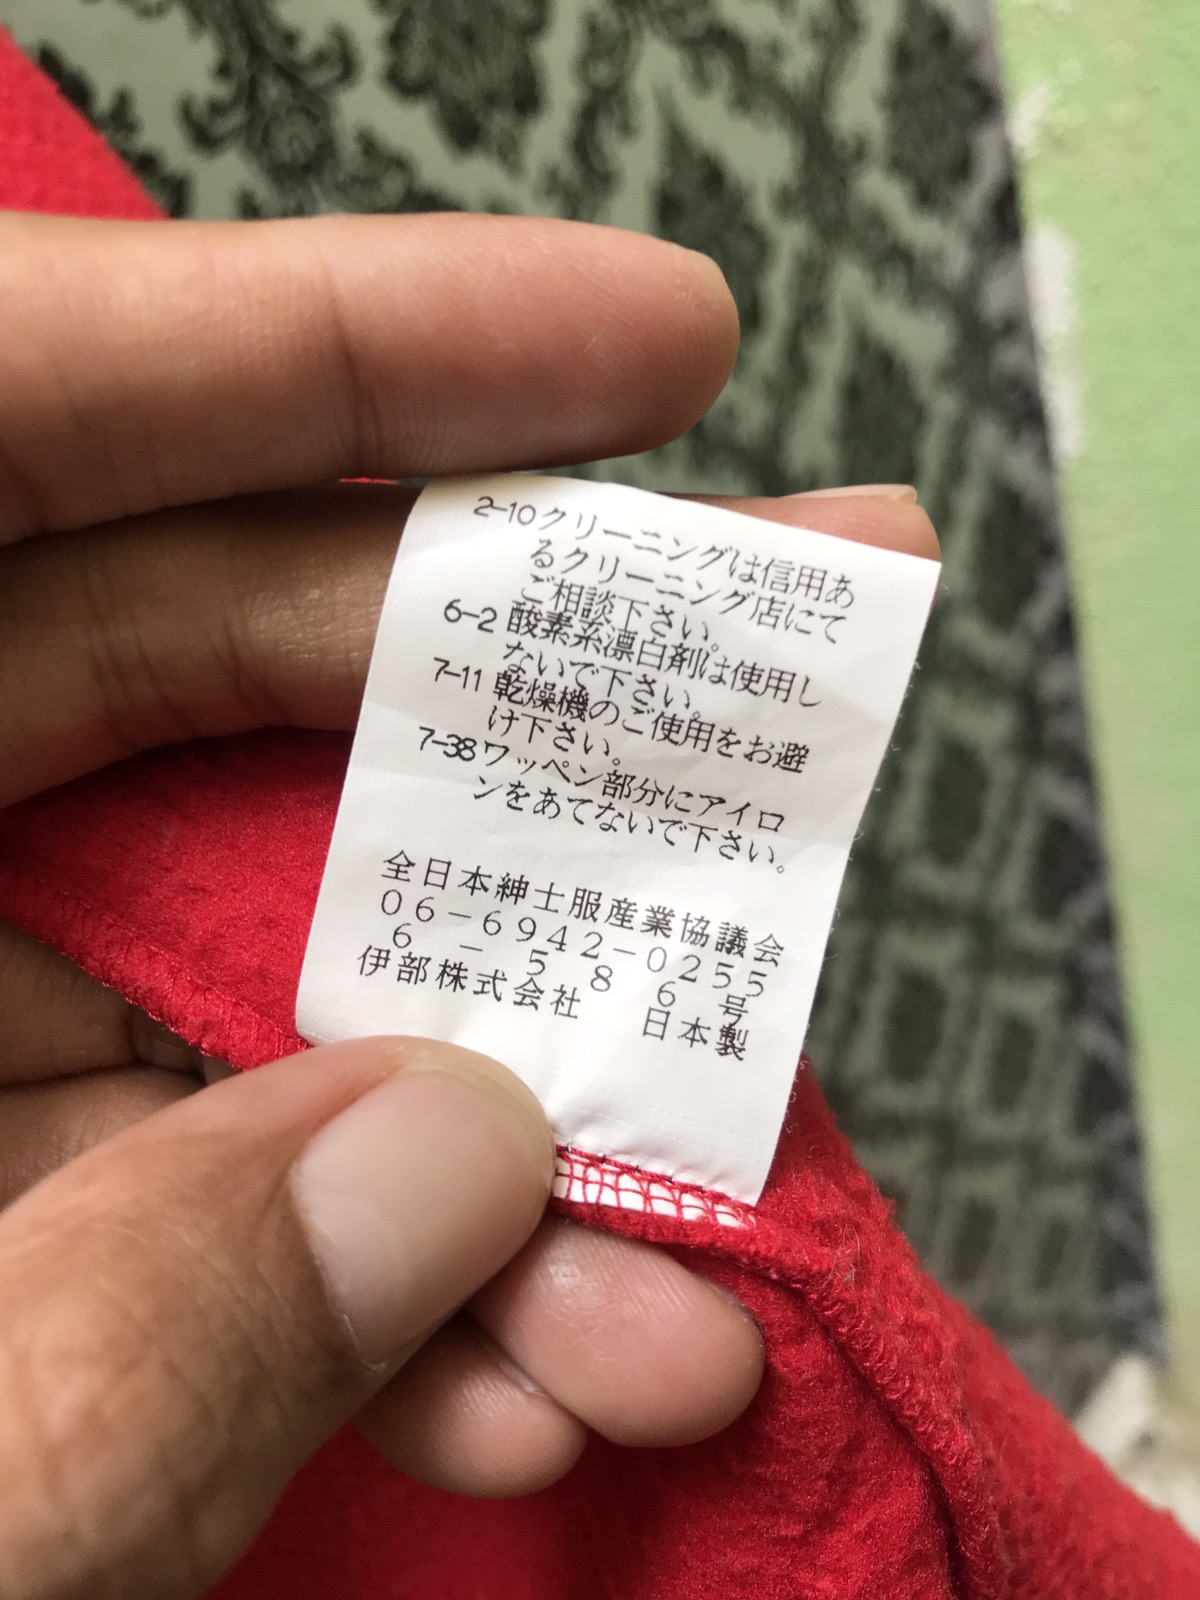 Japanese Brand - SINA COVA LUPO DI MARE FLEECE BUTTON SHIRT MADE IN JAPAN - 9